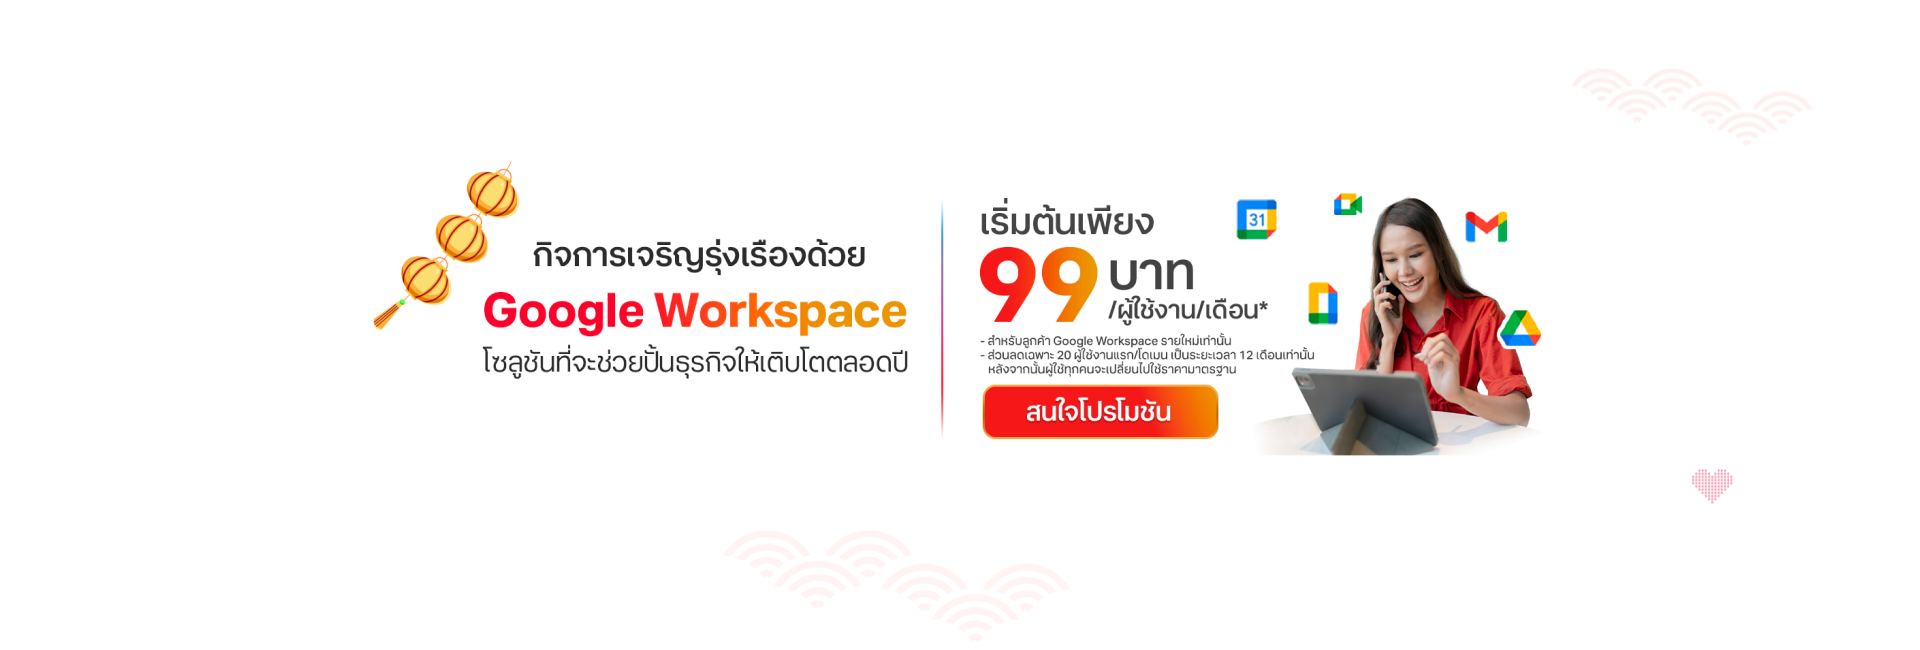 google-workspace-chinese-new-year